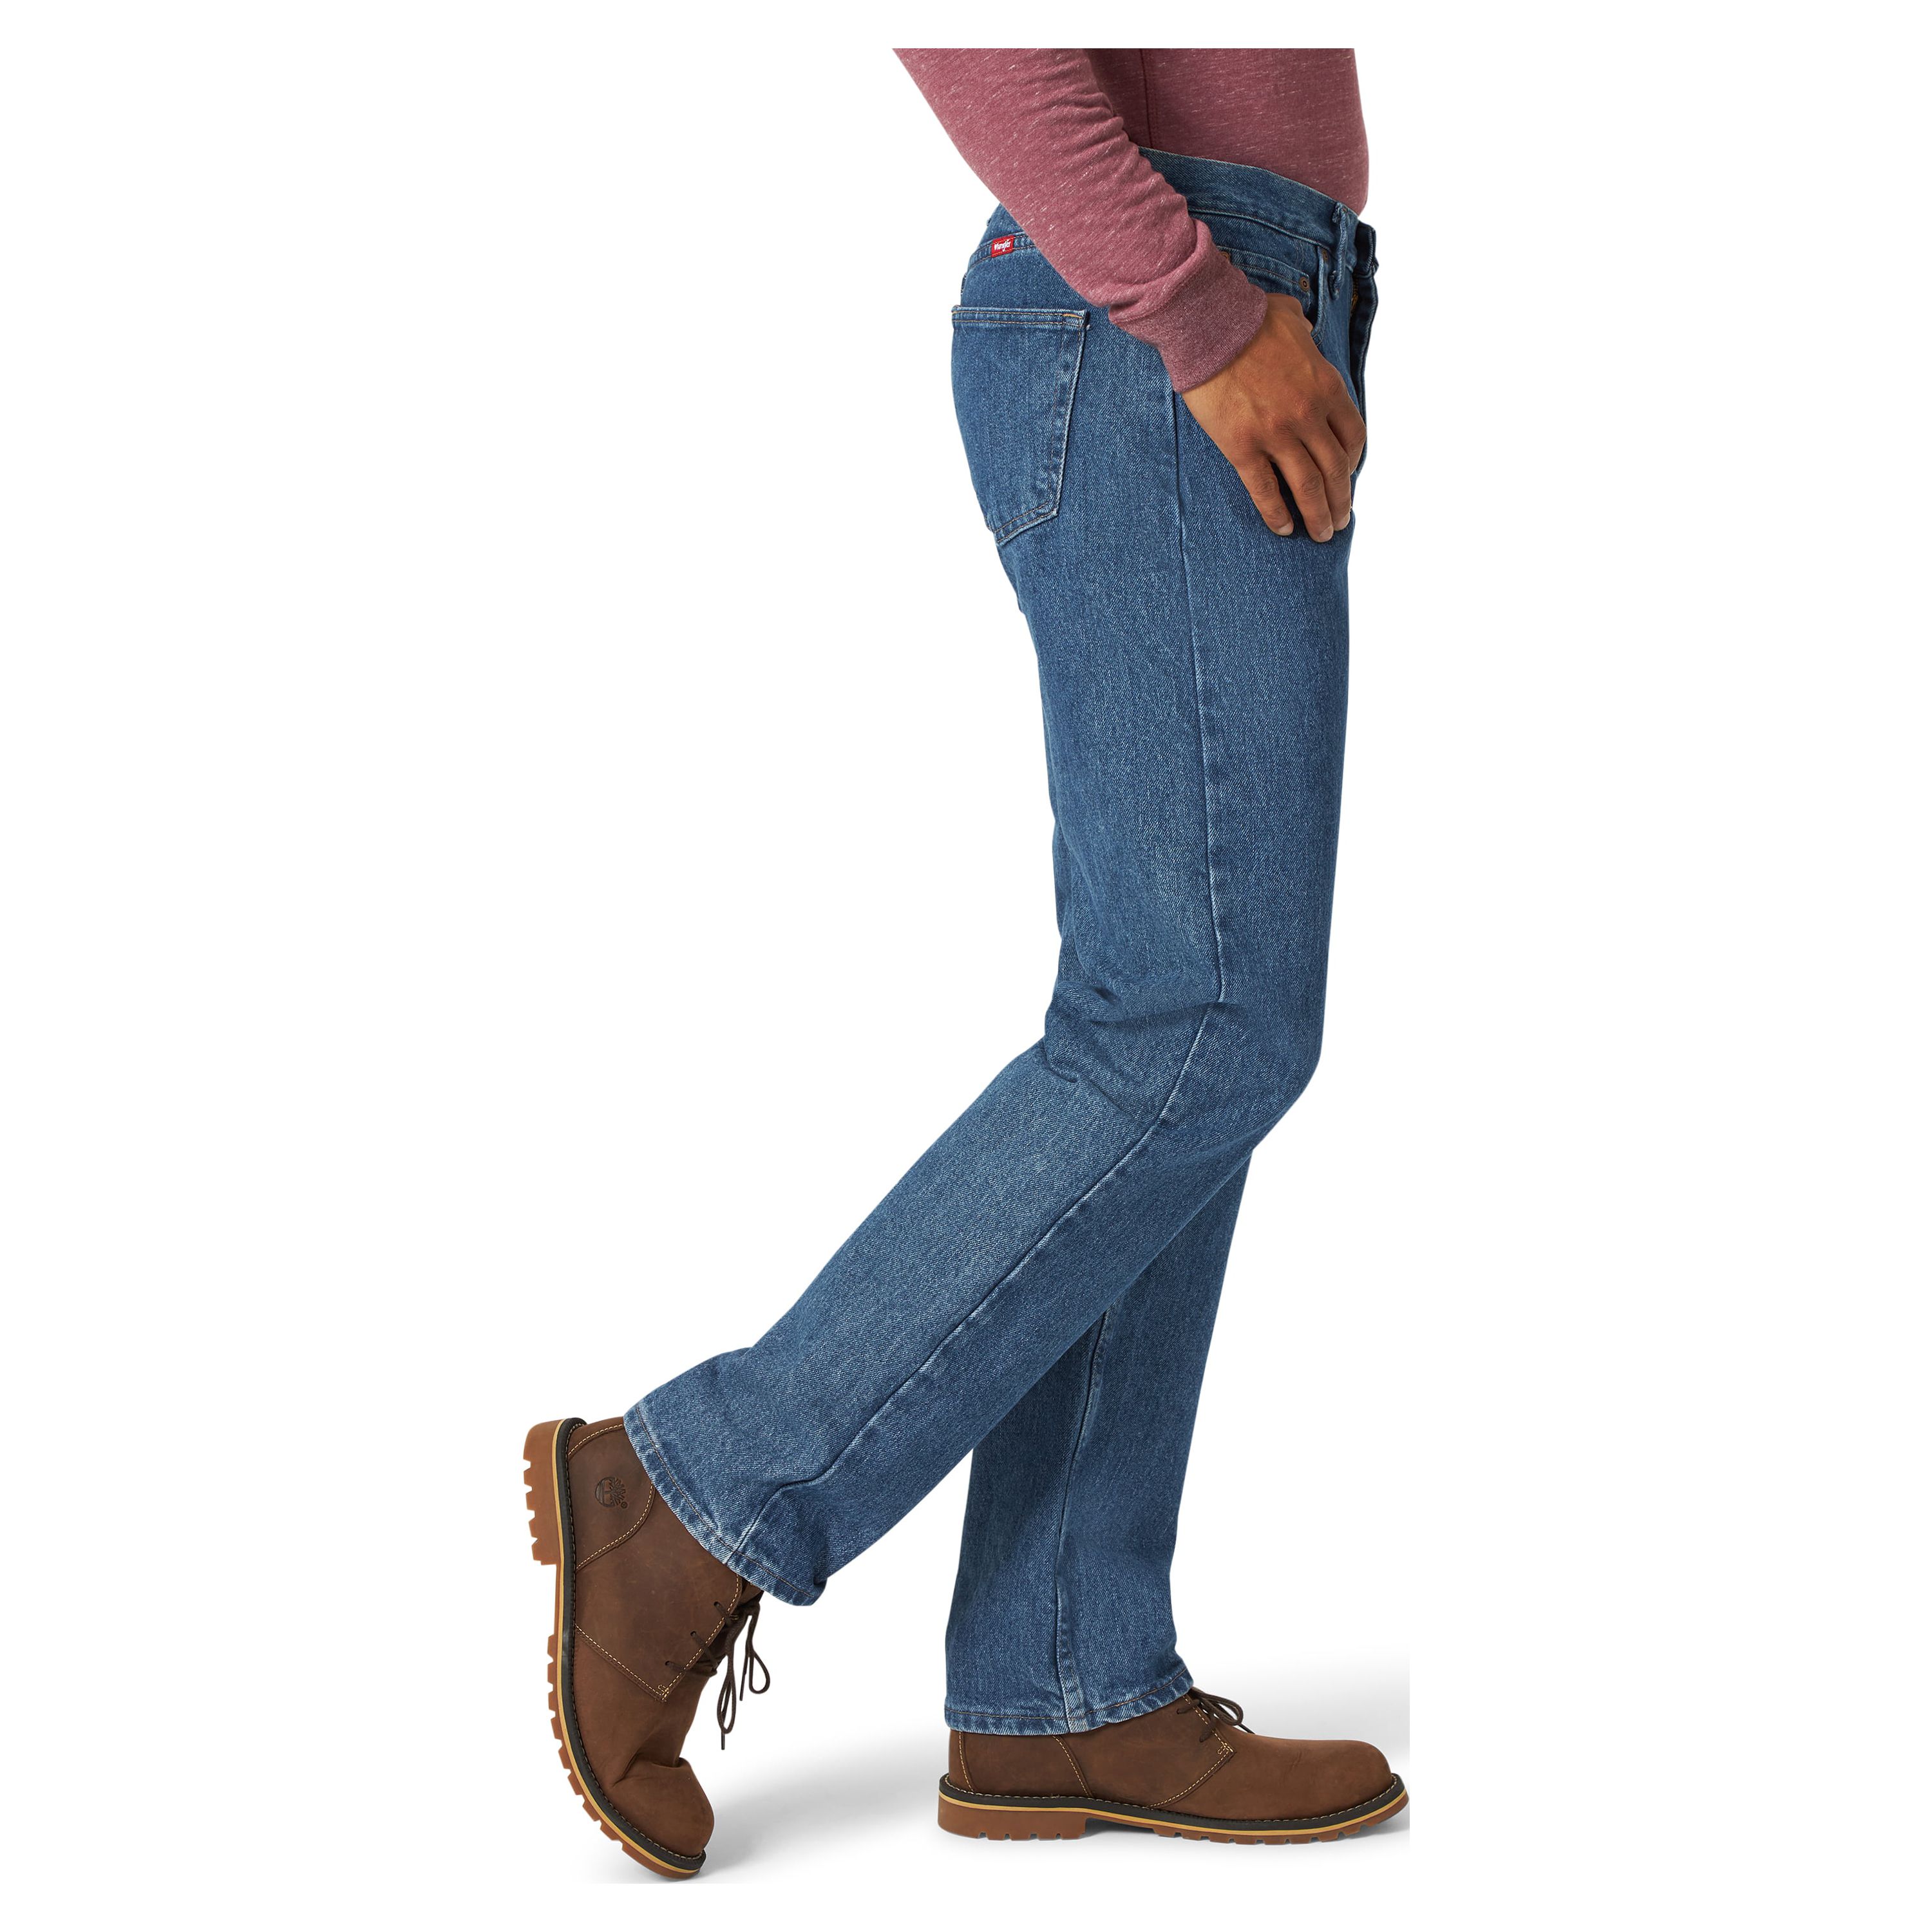 Wrangler Men's and Big Men's Regular Fit Jeans - image 3 of 6